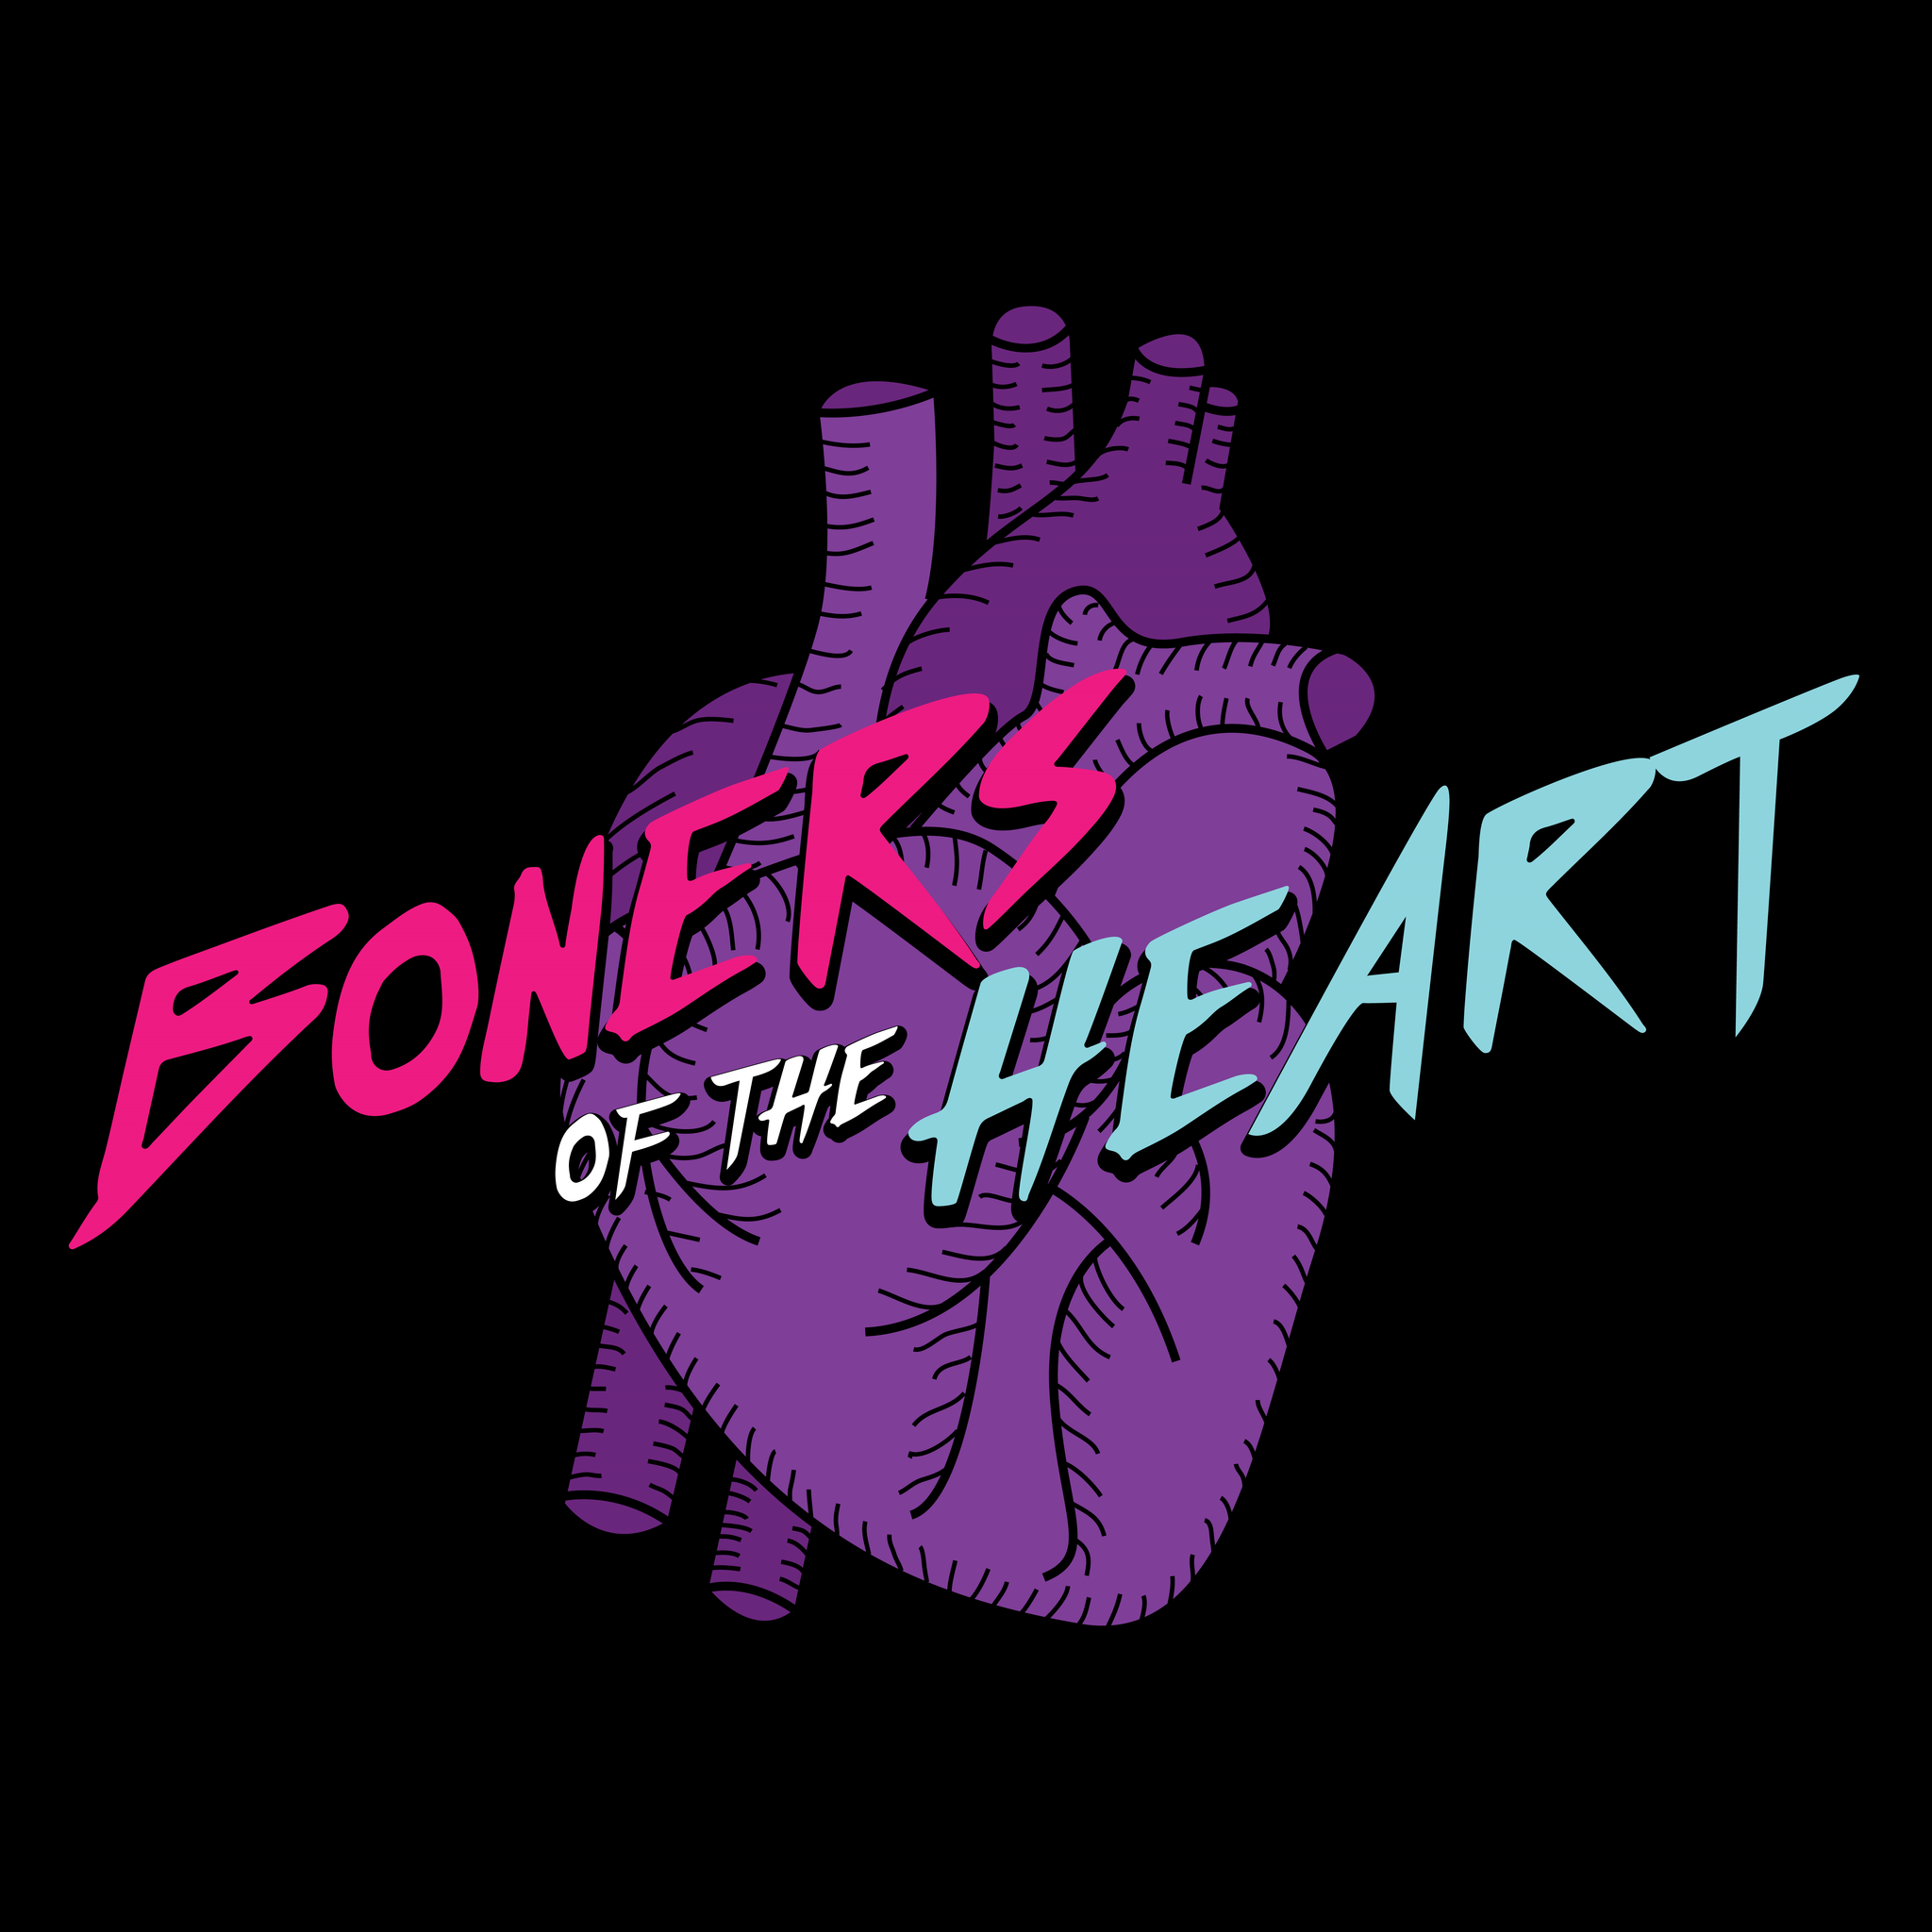 Boners of The Heart